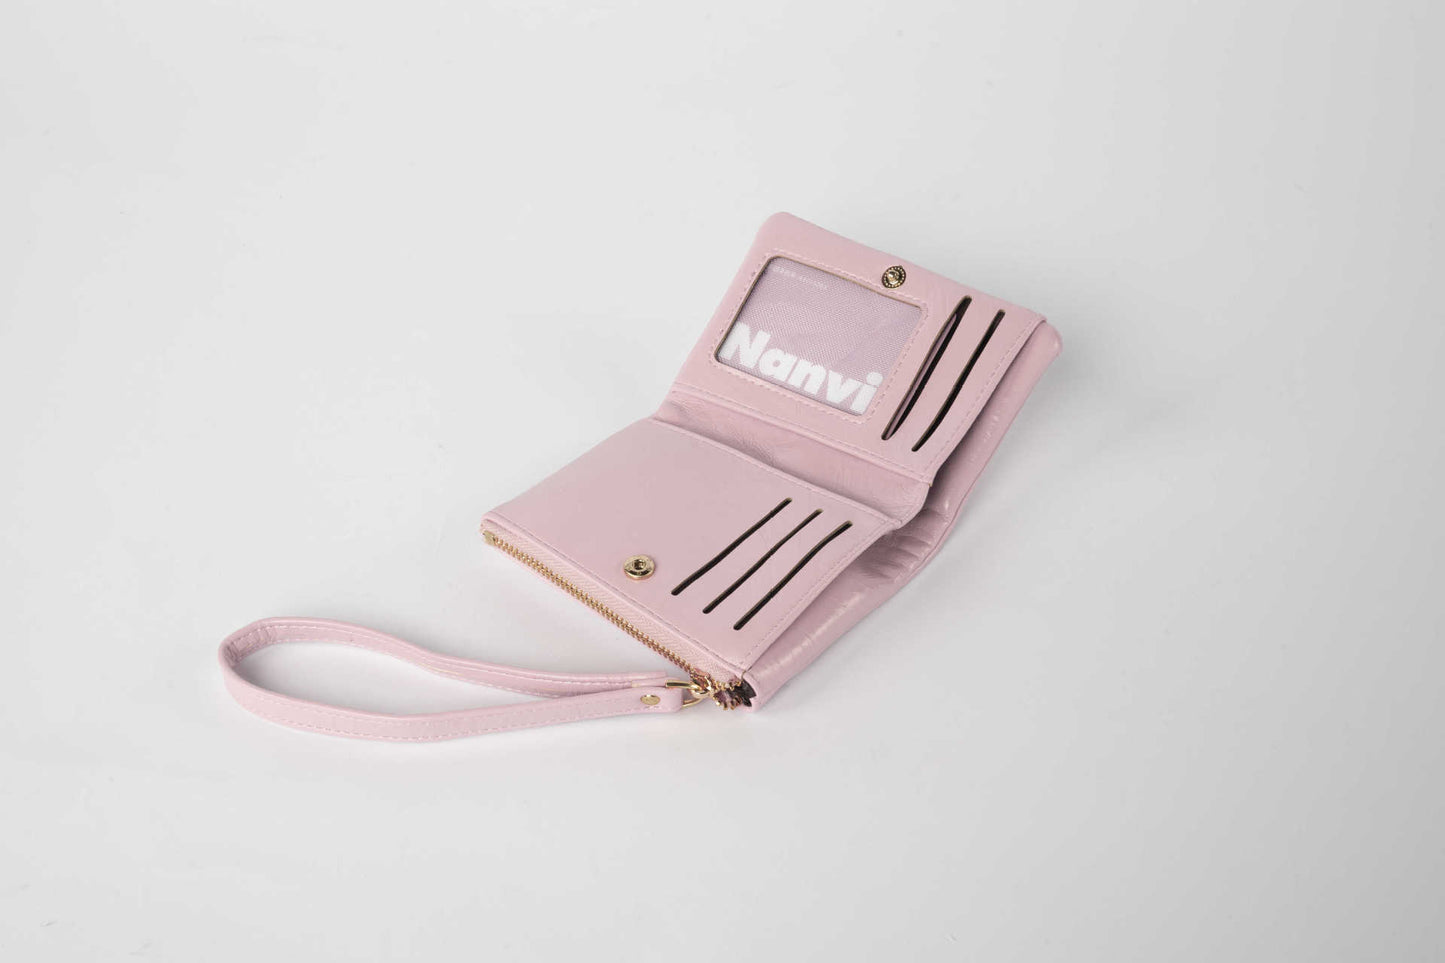 Women's Wallet Short And Simple Fashion Zipper